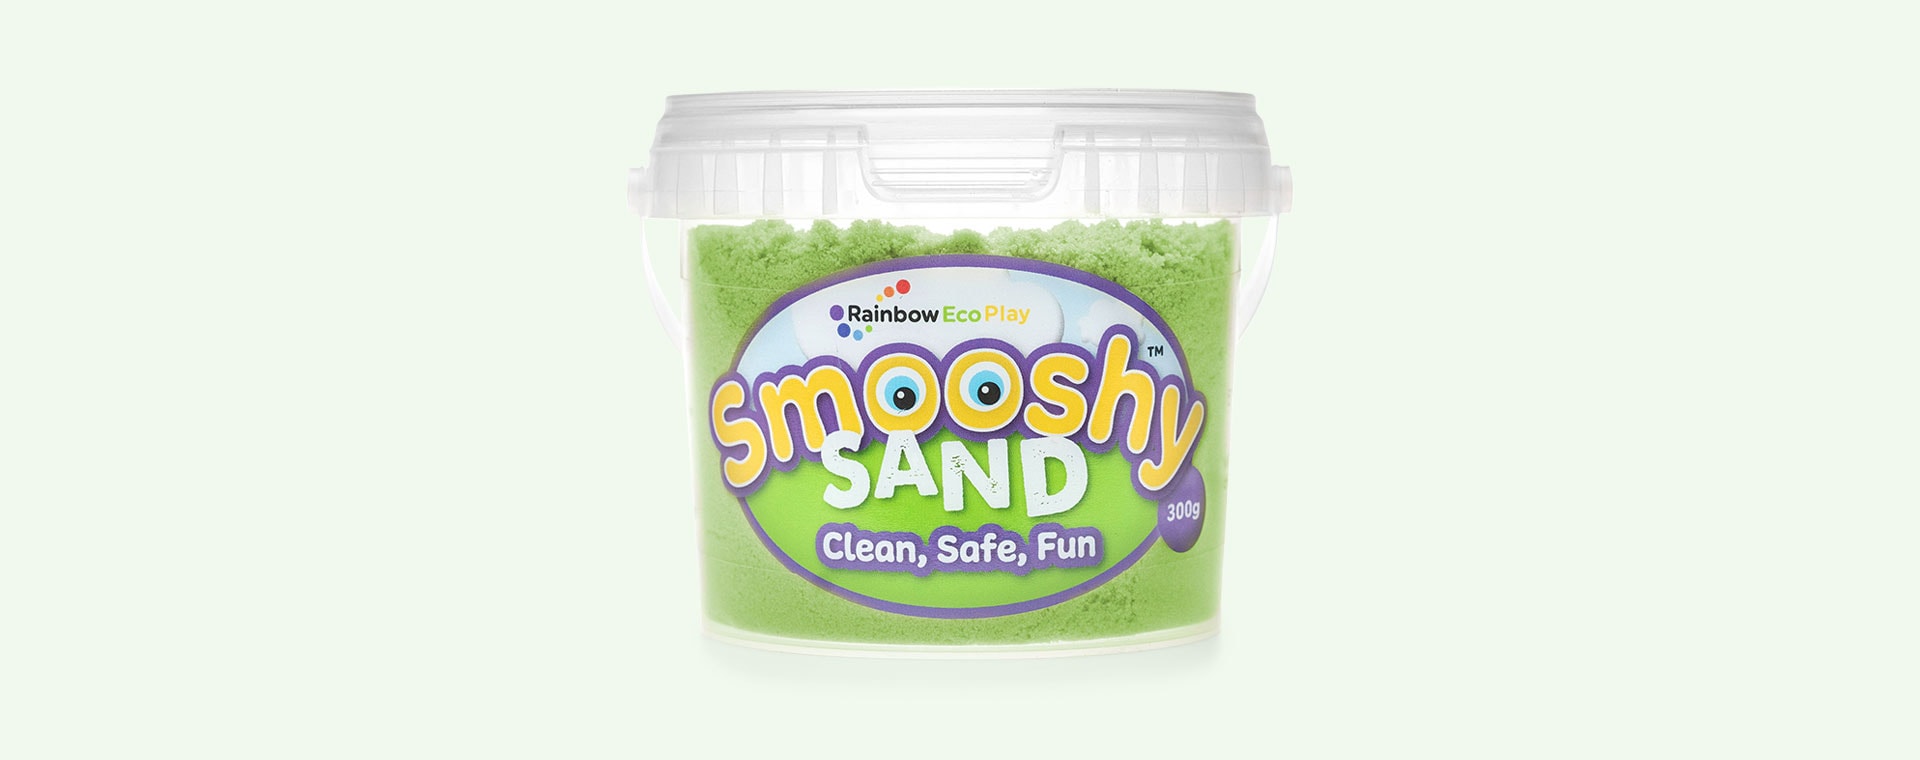 Green Rainbow Eco Play Smooshy Kinetic Magic Sand 300g